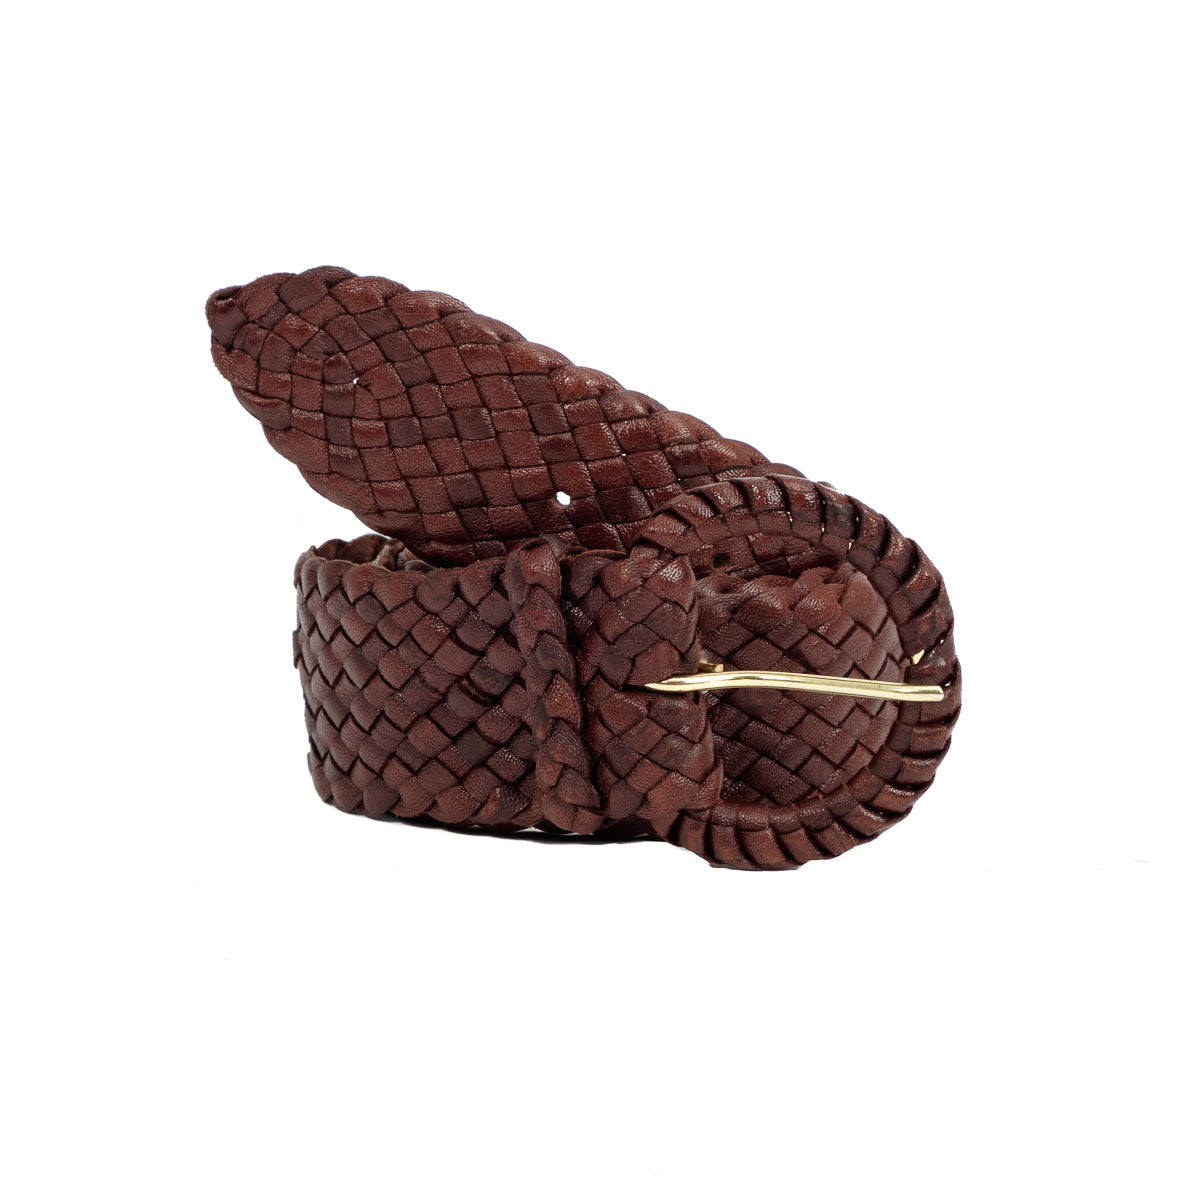 Waratah Plaited Belt - Kangaroo Leather - Aussie Bush Leather